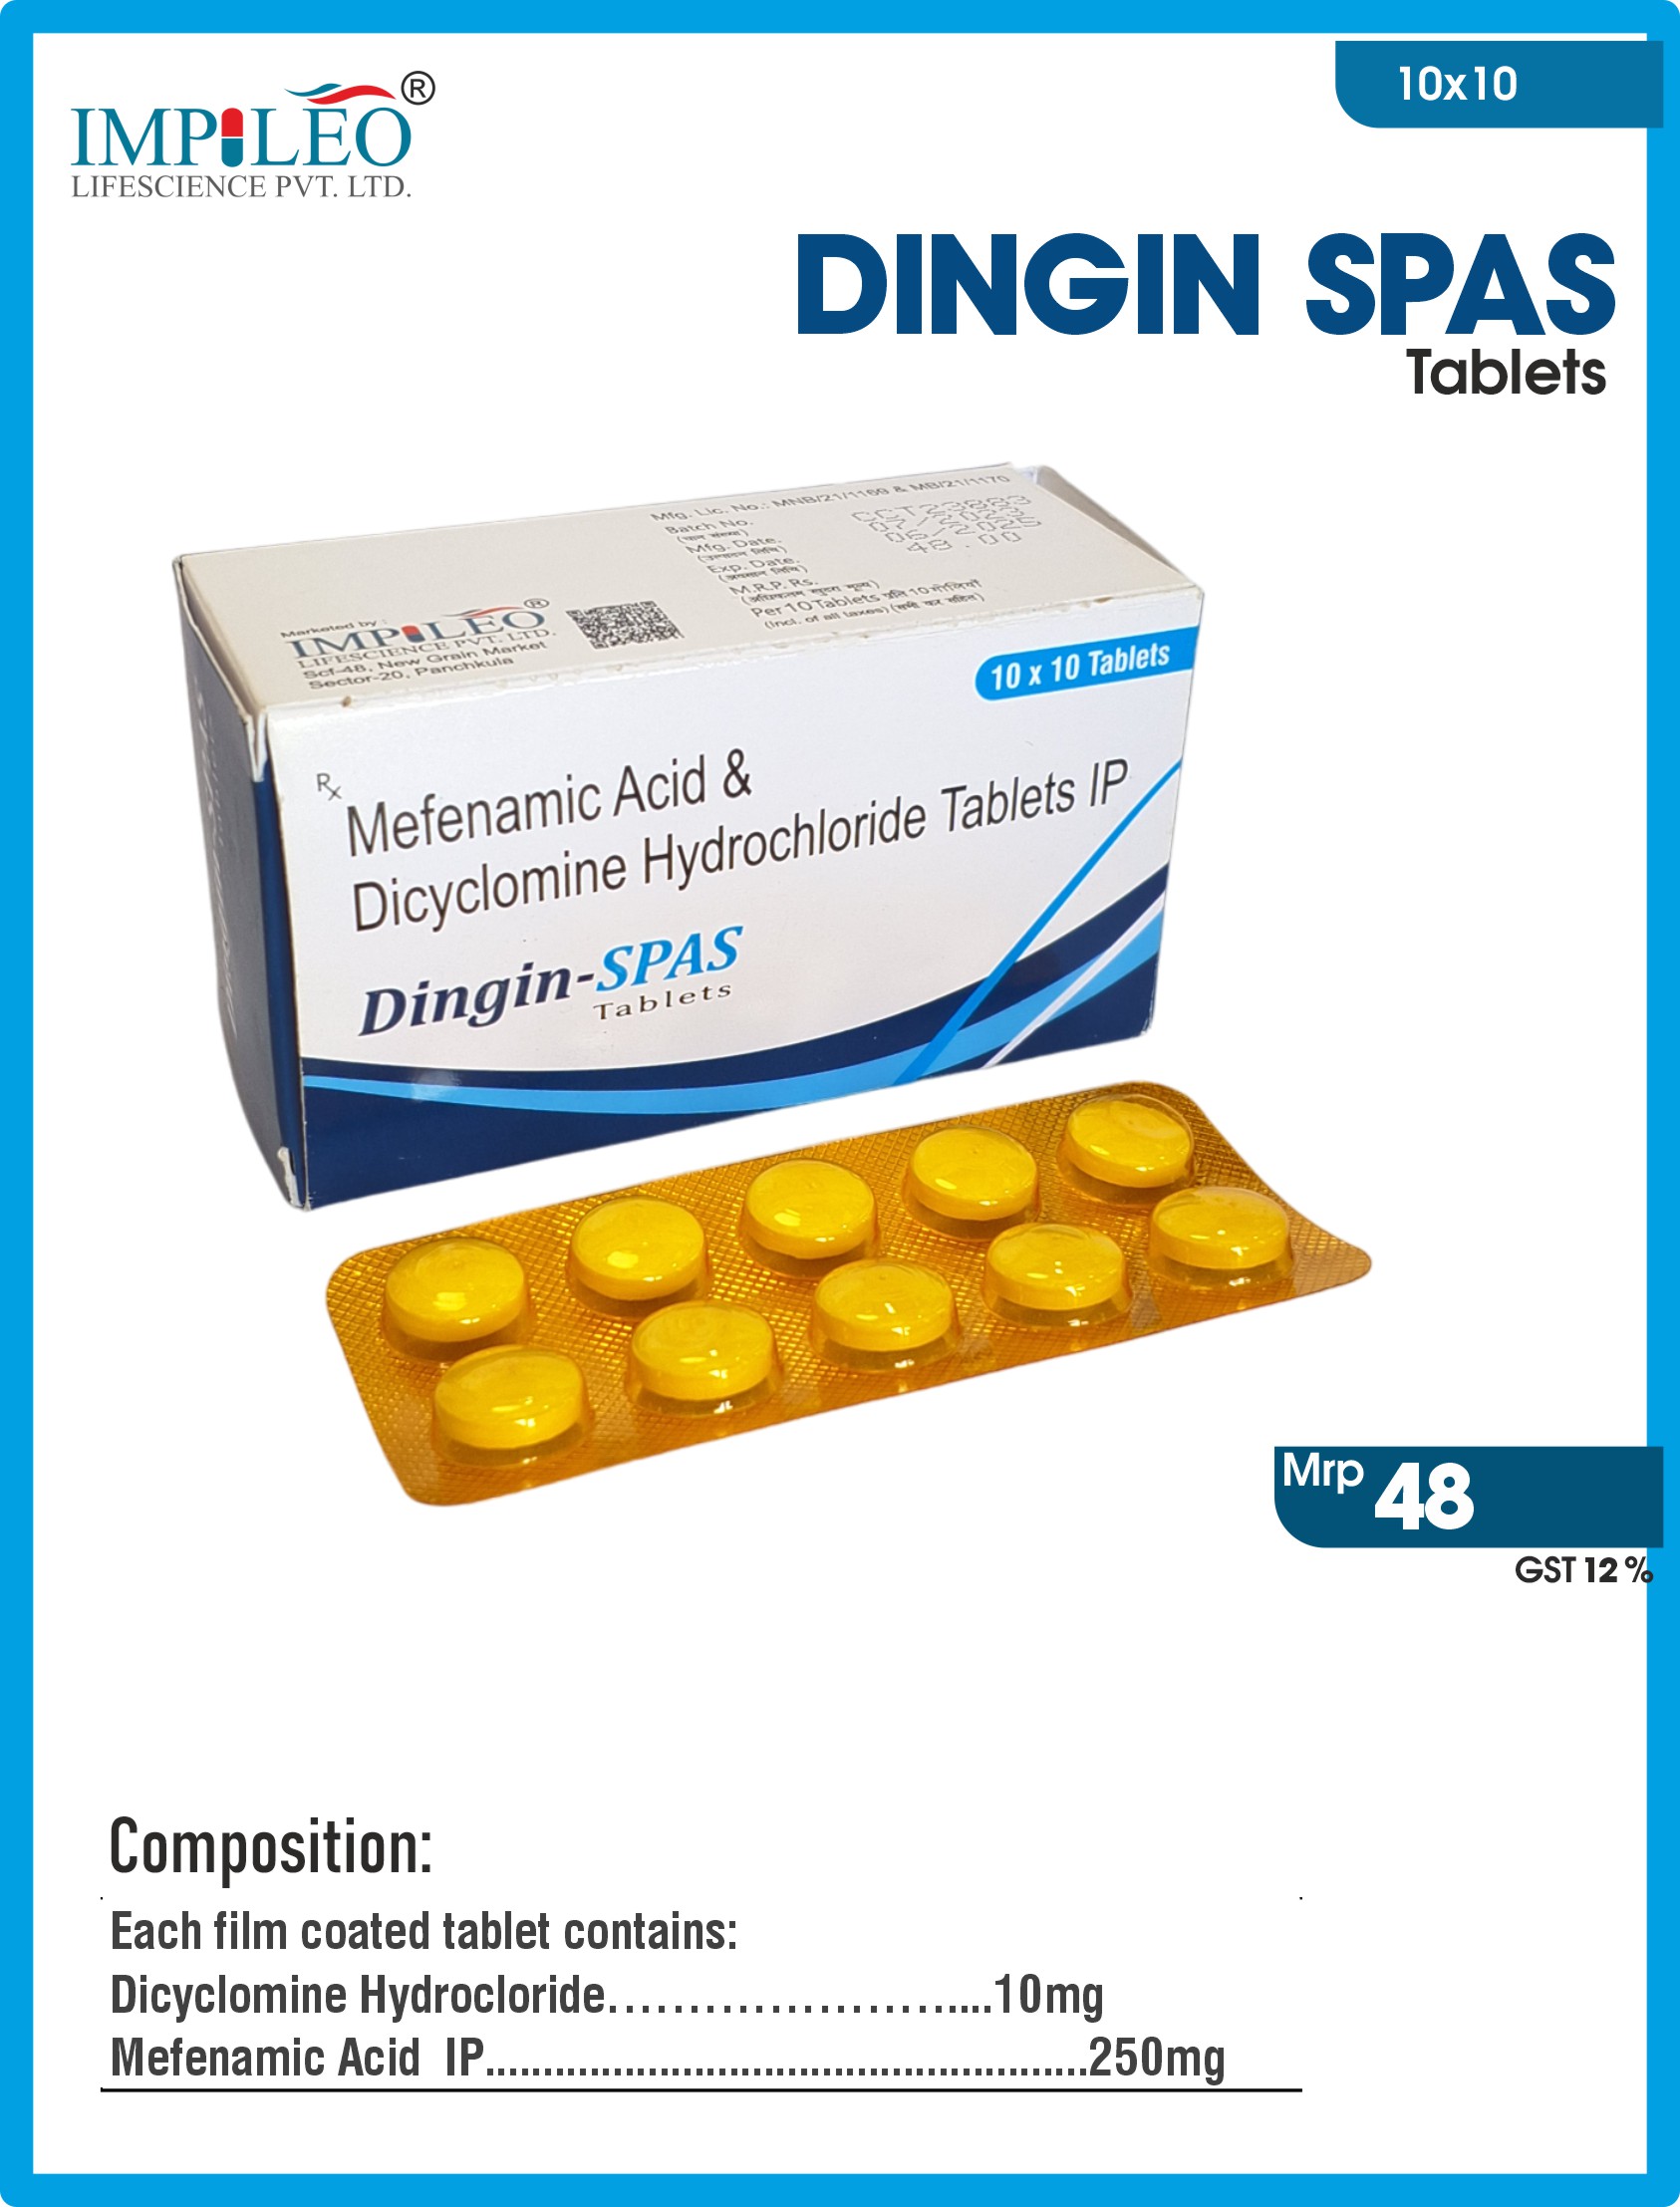 Partner for Success : Prime PCD Pharma Franchise in India for DINGIN SPAS (Dicyclomine Hydrochloride & Mefenamic Acid) Tablets